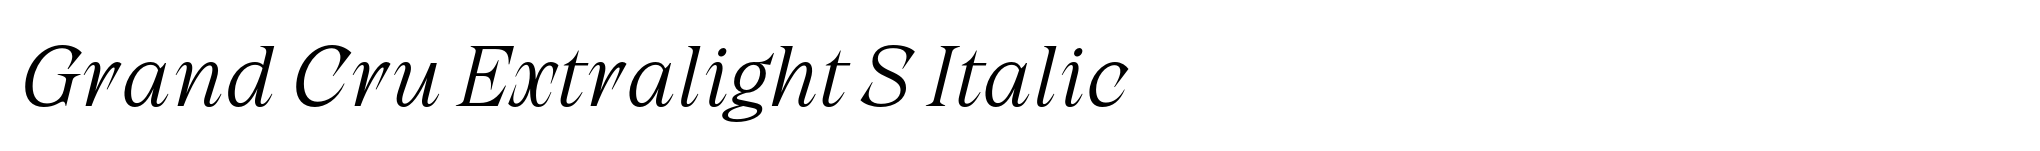 Grand Cru Extralight S Italic image